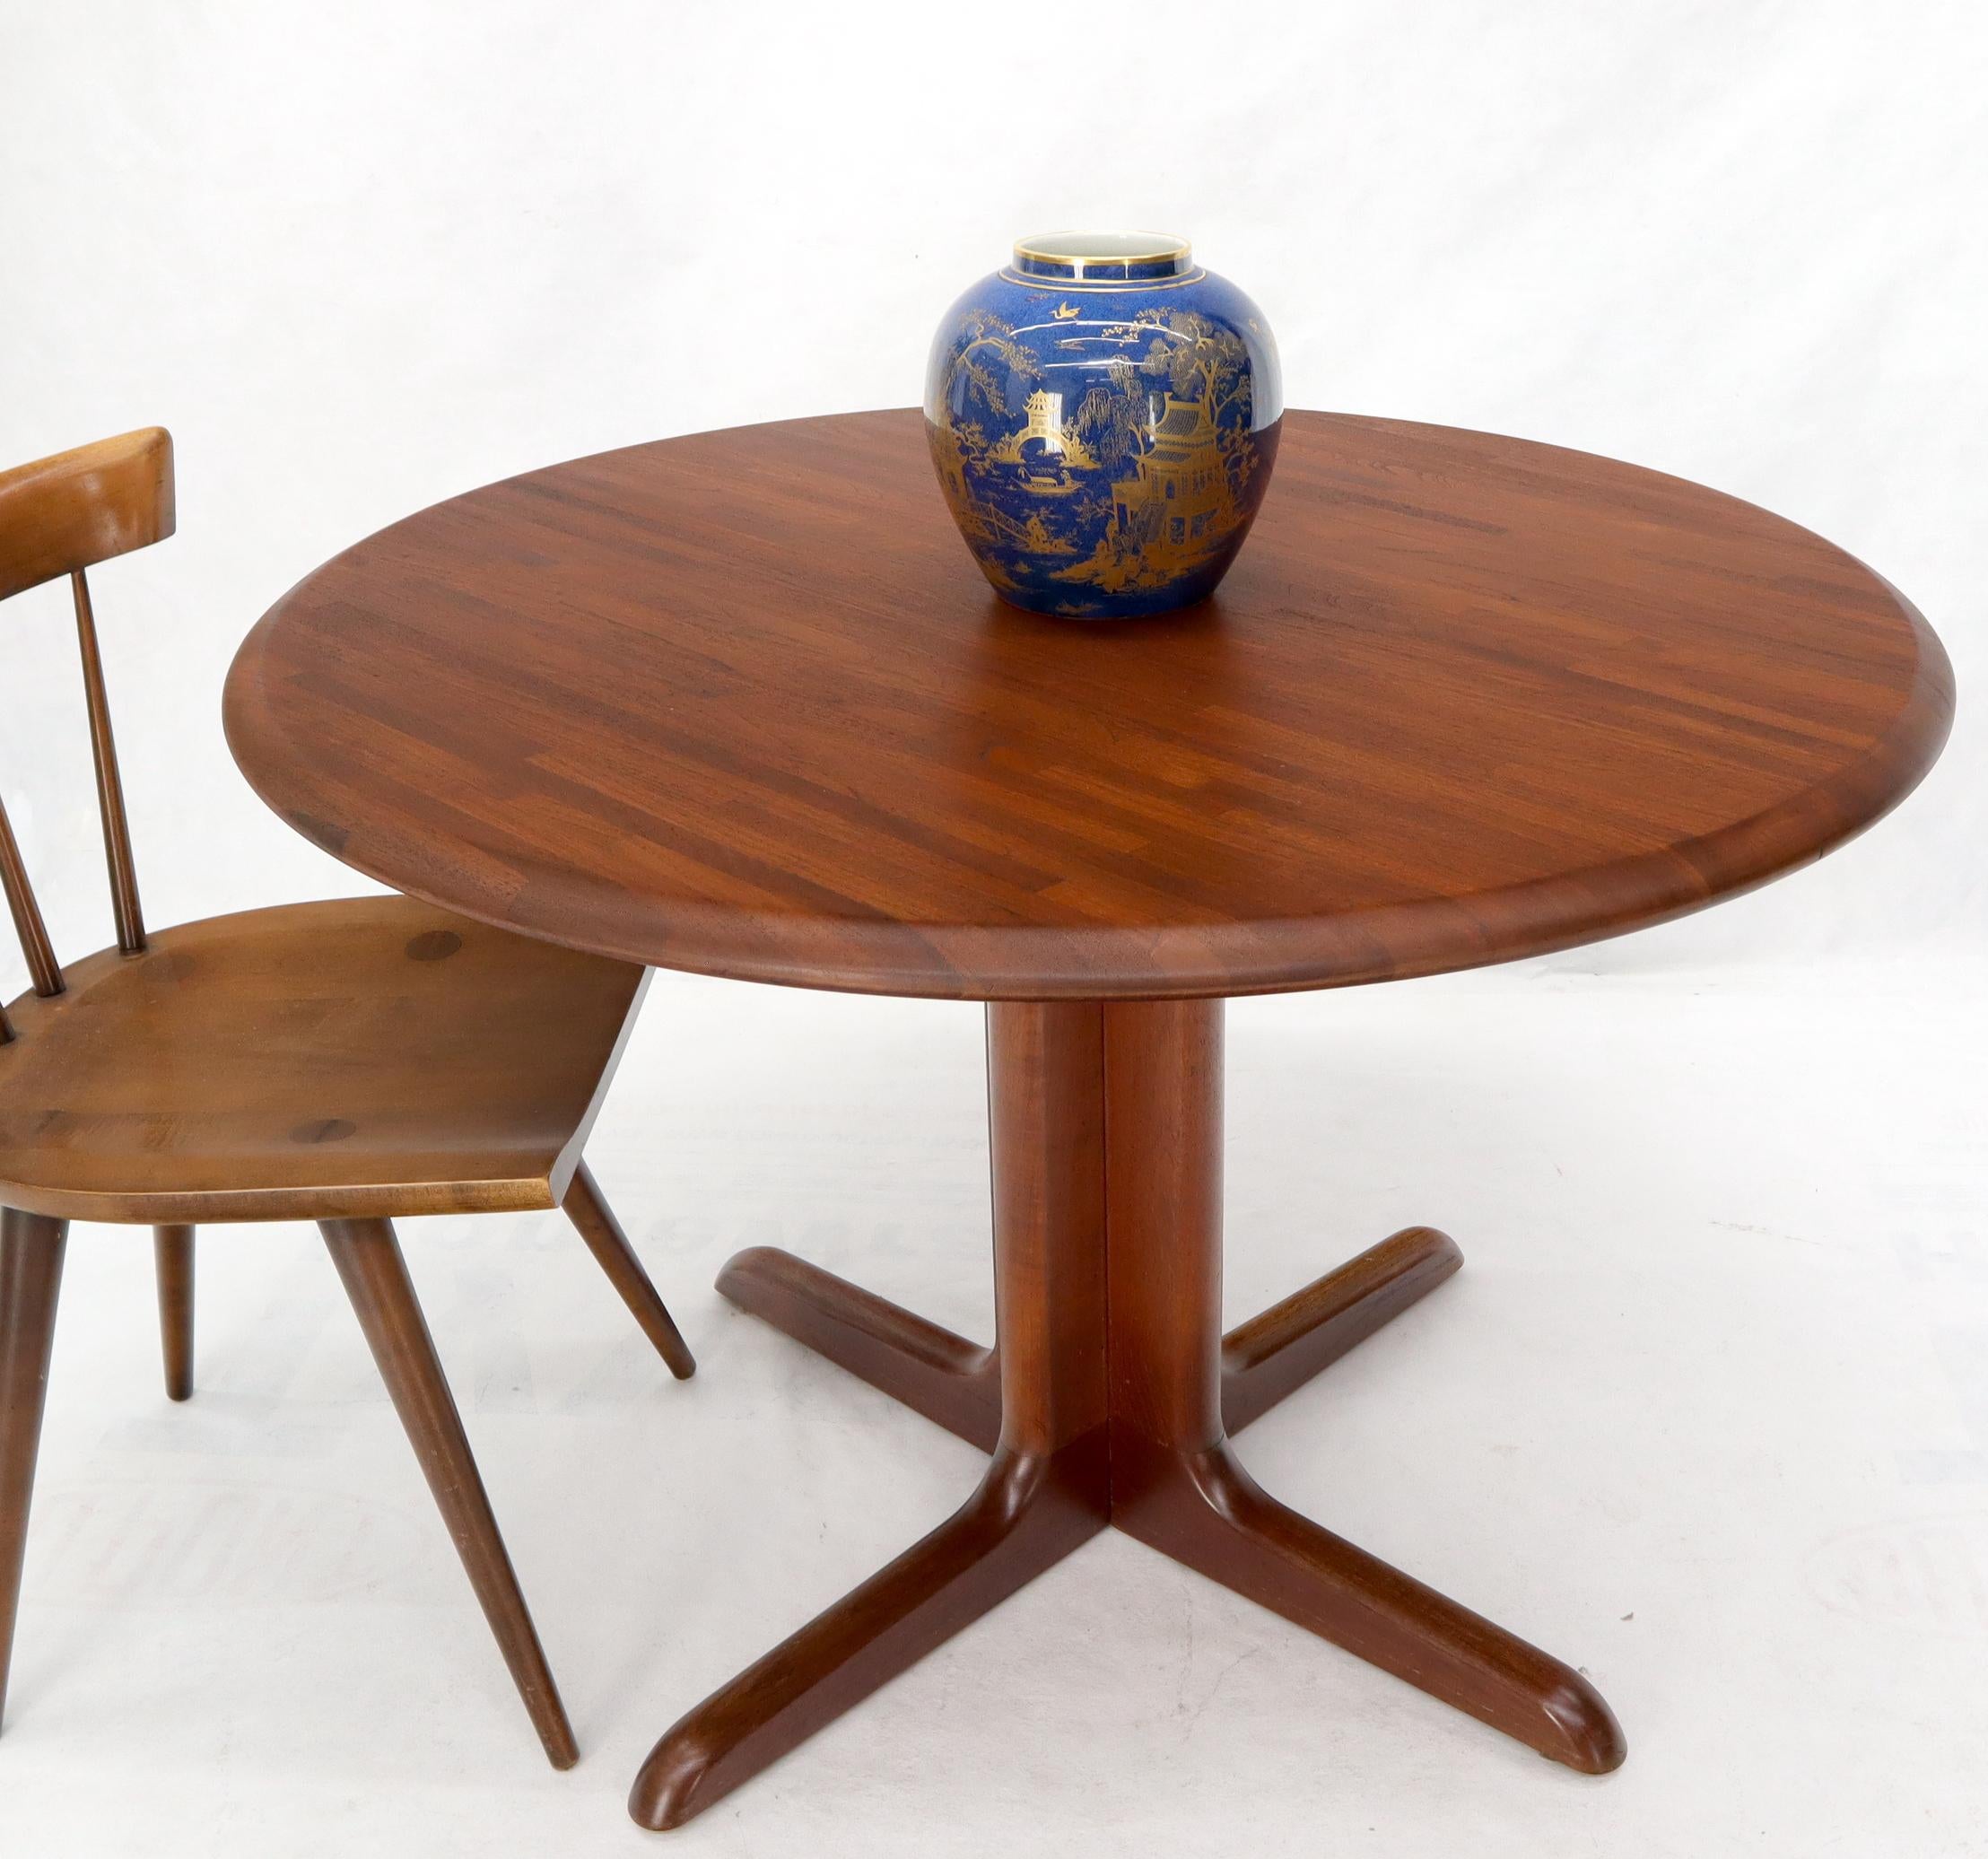 Danish Mid-Century Modern round solid teak dining table.